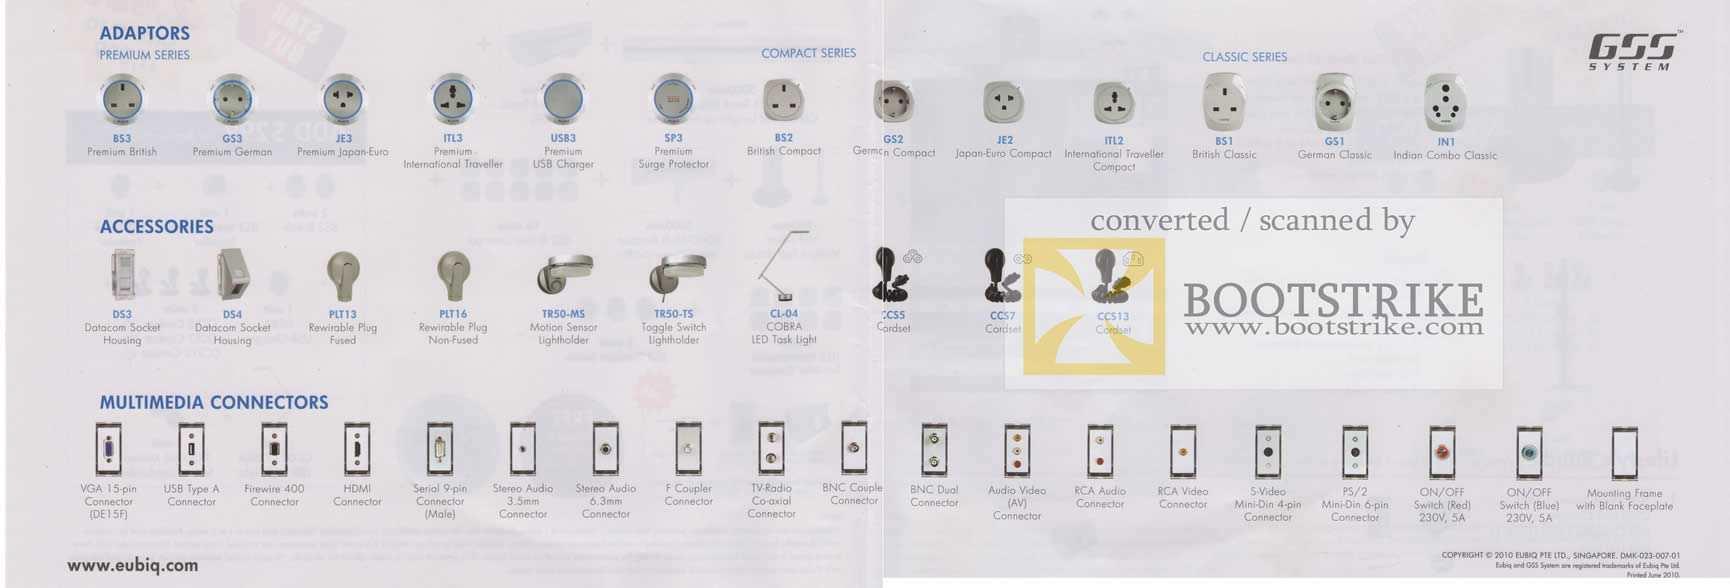 PC Show 2010 price list image brochure of Eubiq Adaptors Premium Compct Classic GSS System Accessories Multimedia Connectors